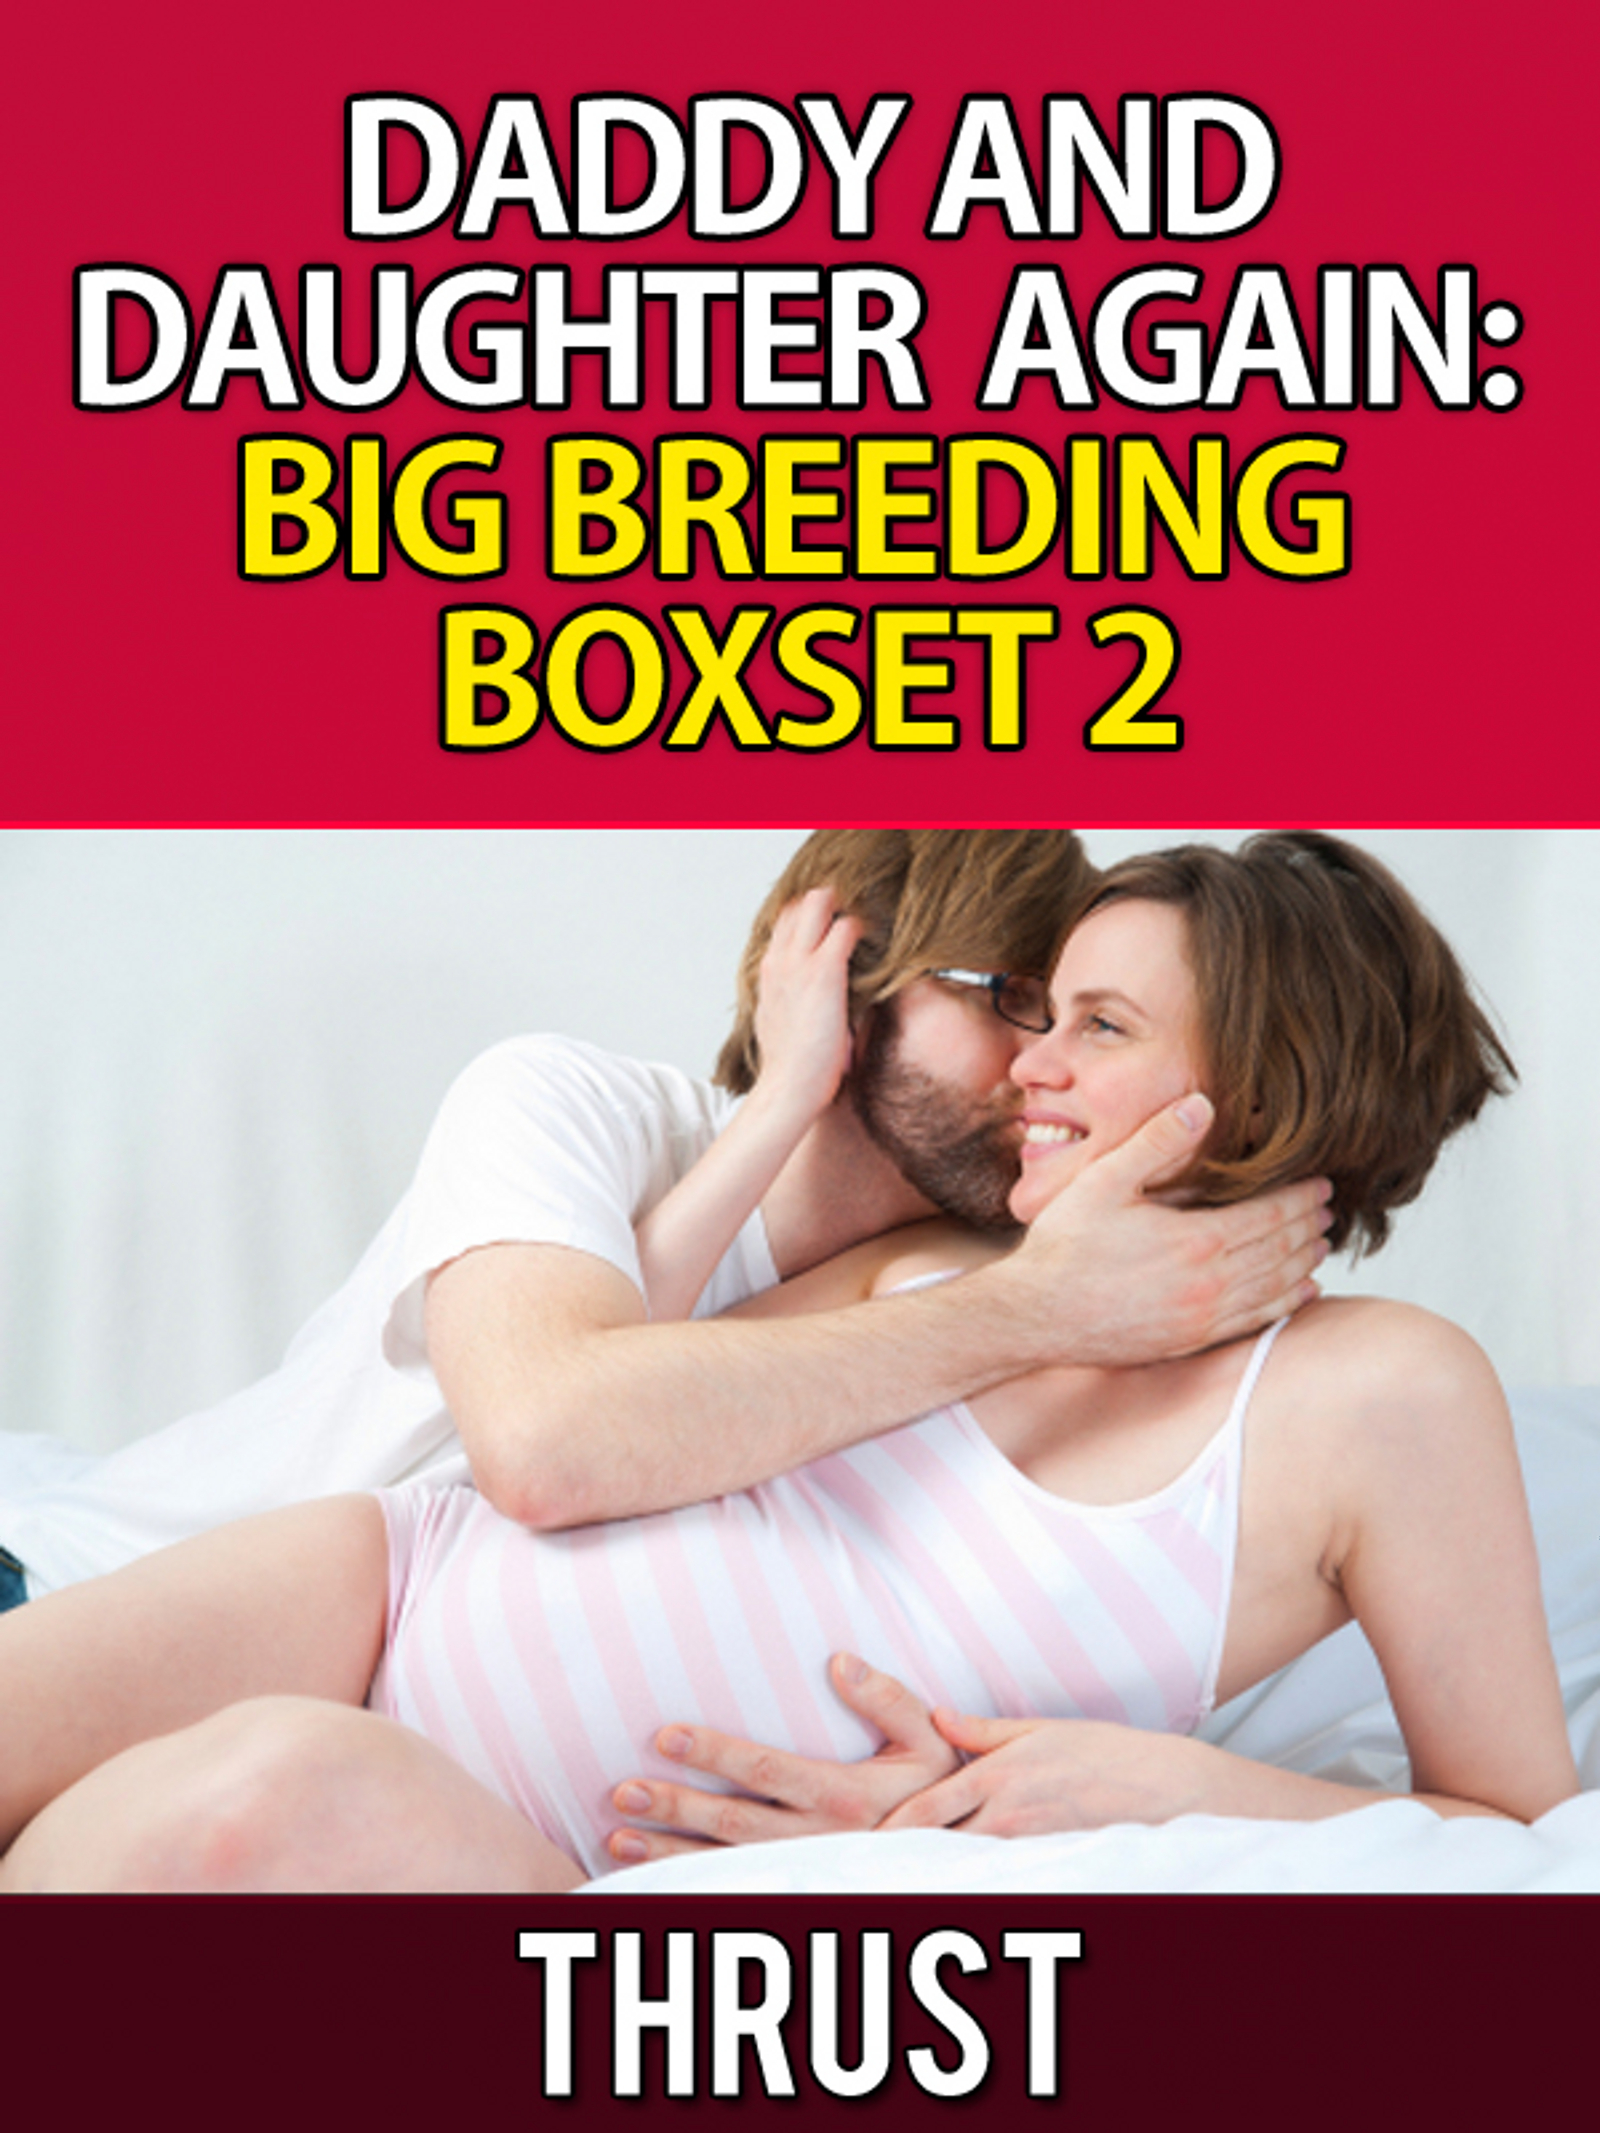 Human Father Breeding Daughter